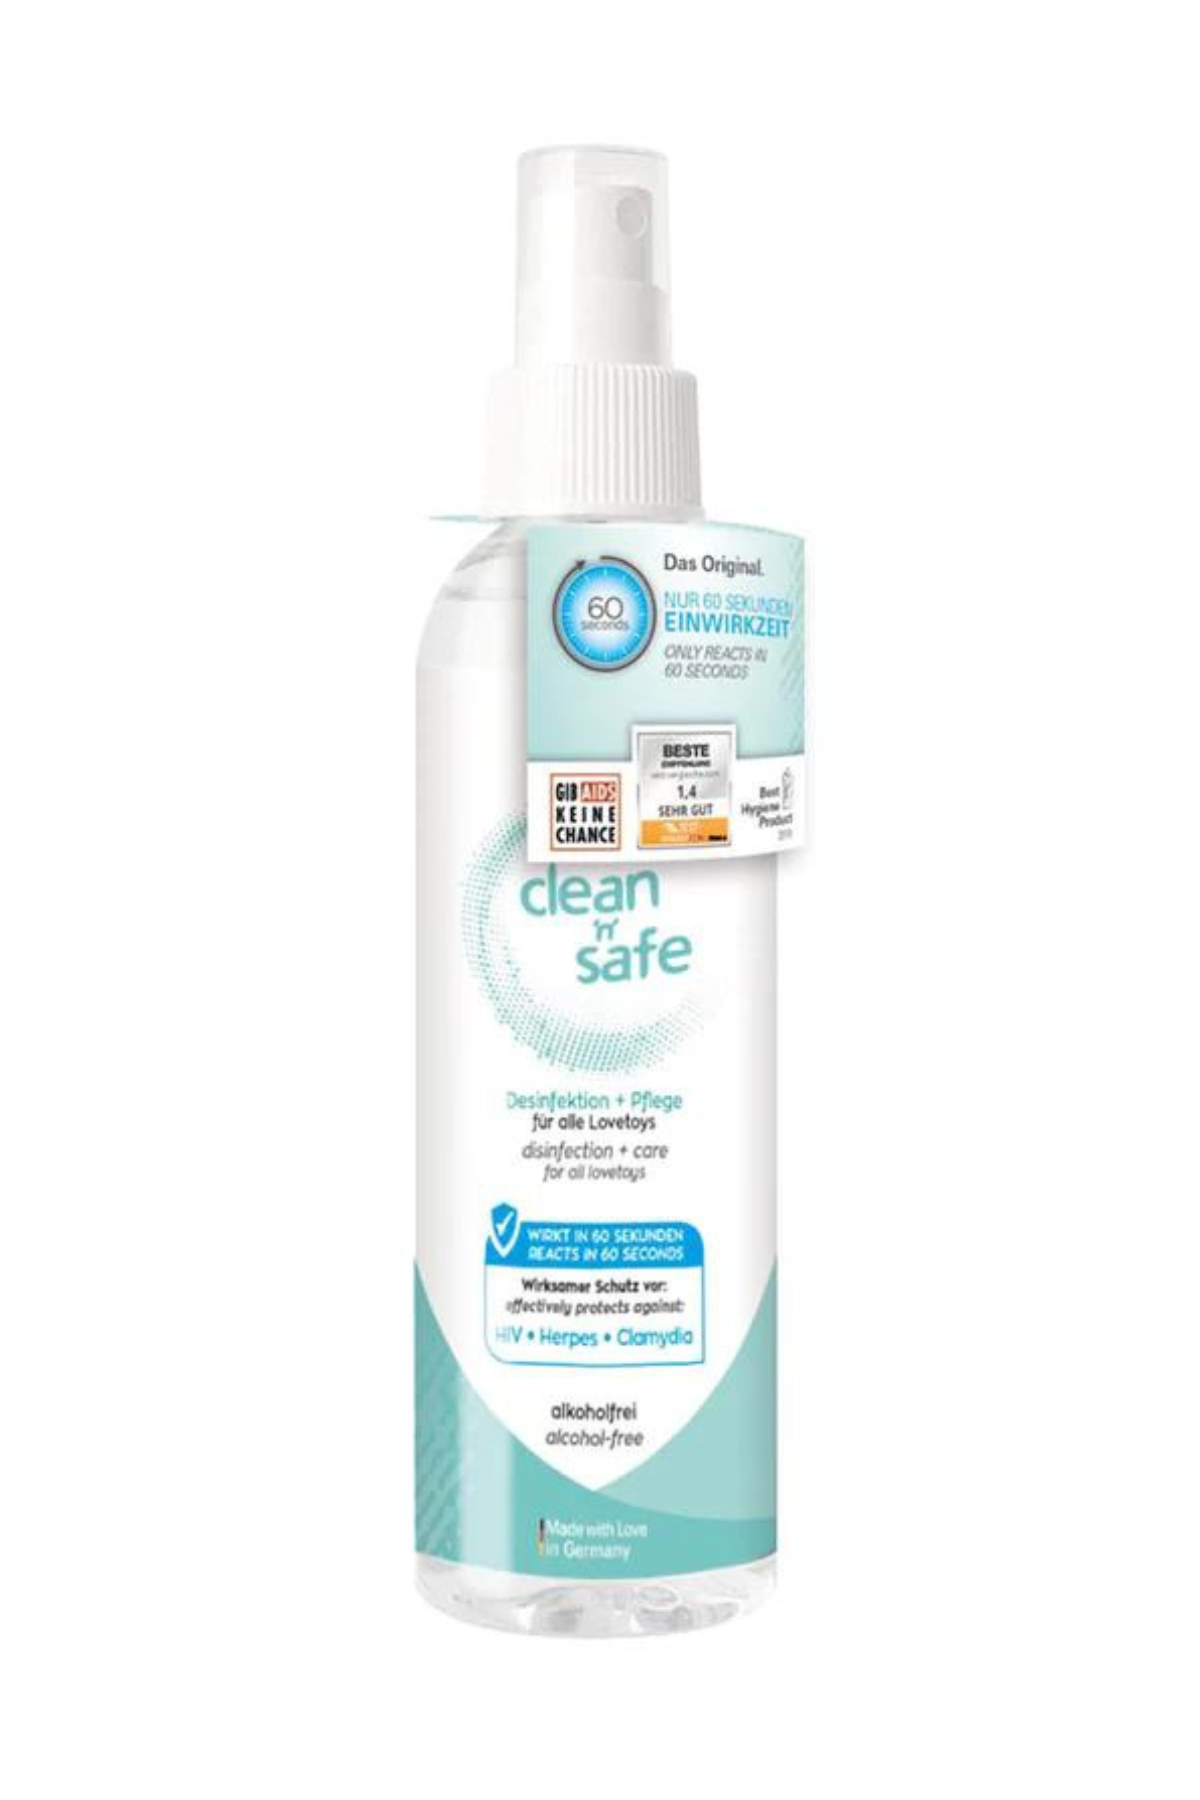 Clean 'n' Safe Hygiene Spray 100ml